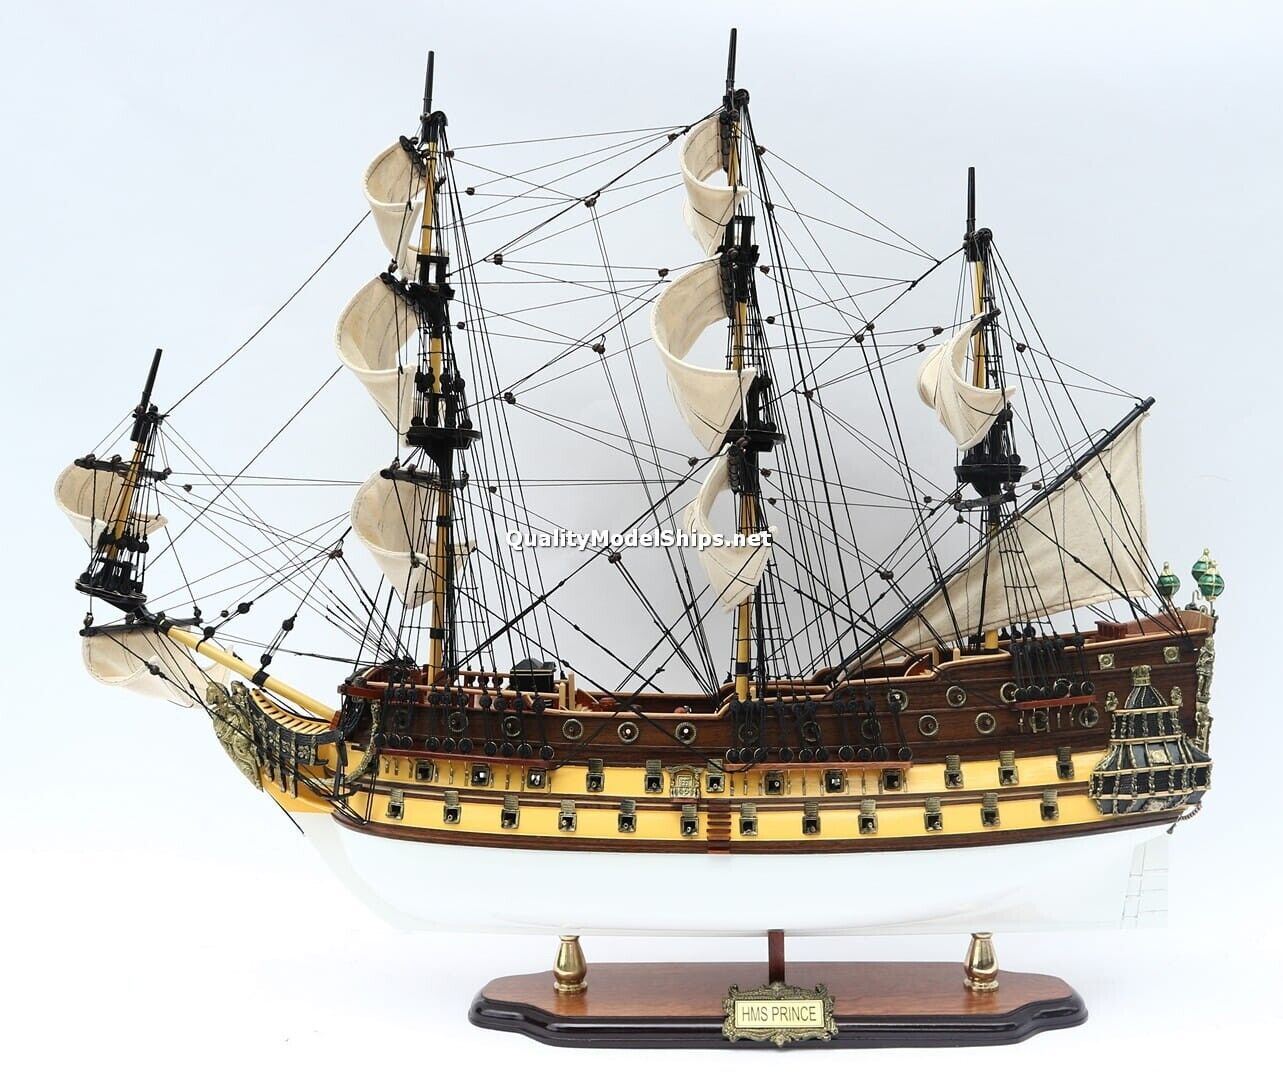 HMS Prince Wooden Model Ship